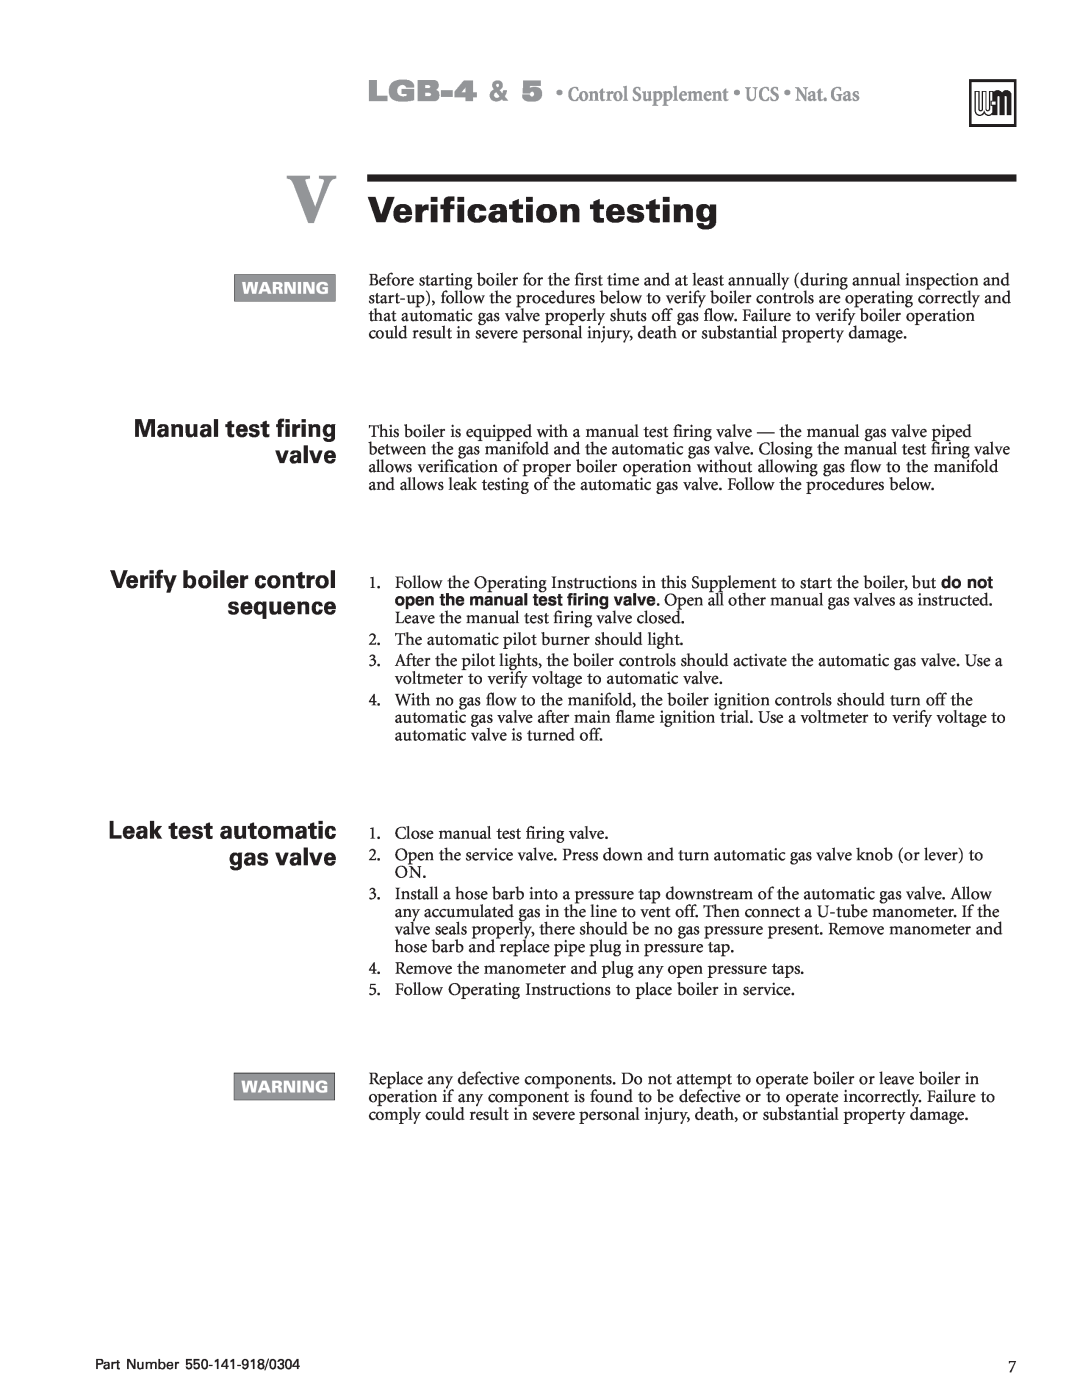 Weil-McLain LGB-4, LGB-5 V Verification testing, Manual test firing valve, Verify boiler control sequence 